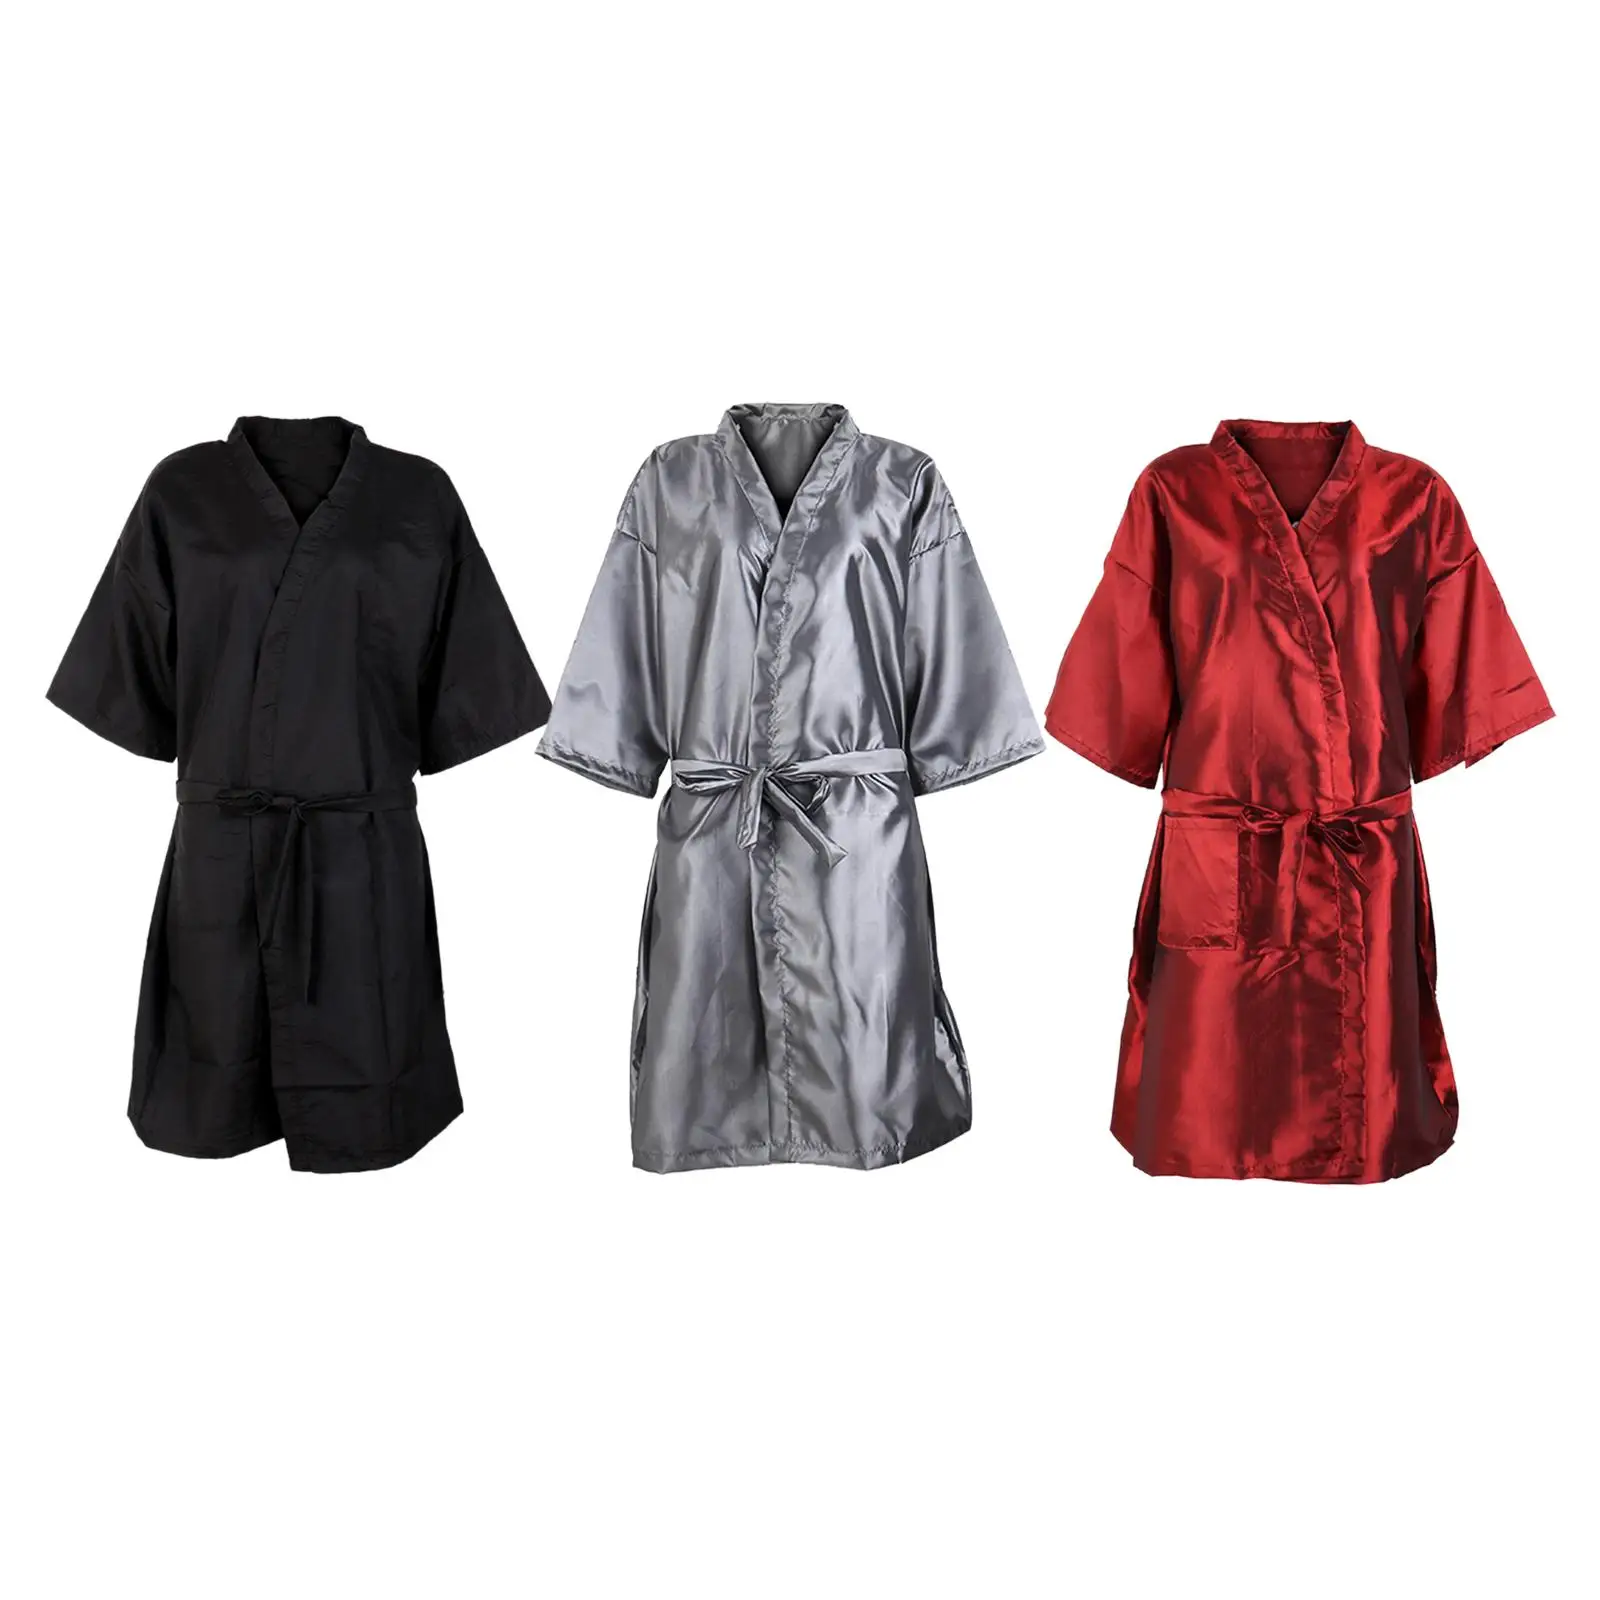 Women Robe Kimono Robes Sleepwear Soft with Adjustable Belt Salon Robes Hair Salon Smocks Capes for Beauty Center Pet Groomer